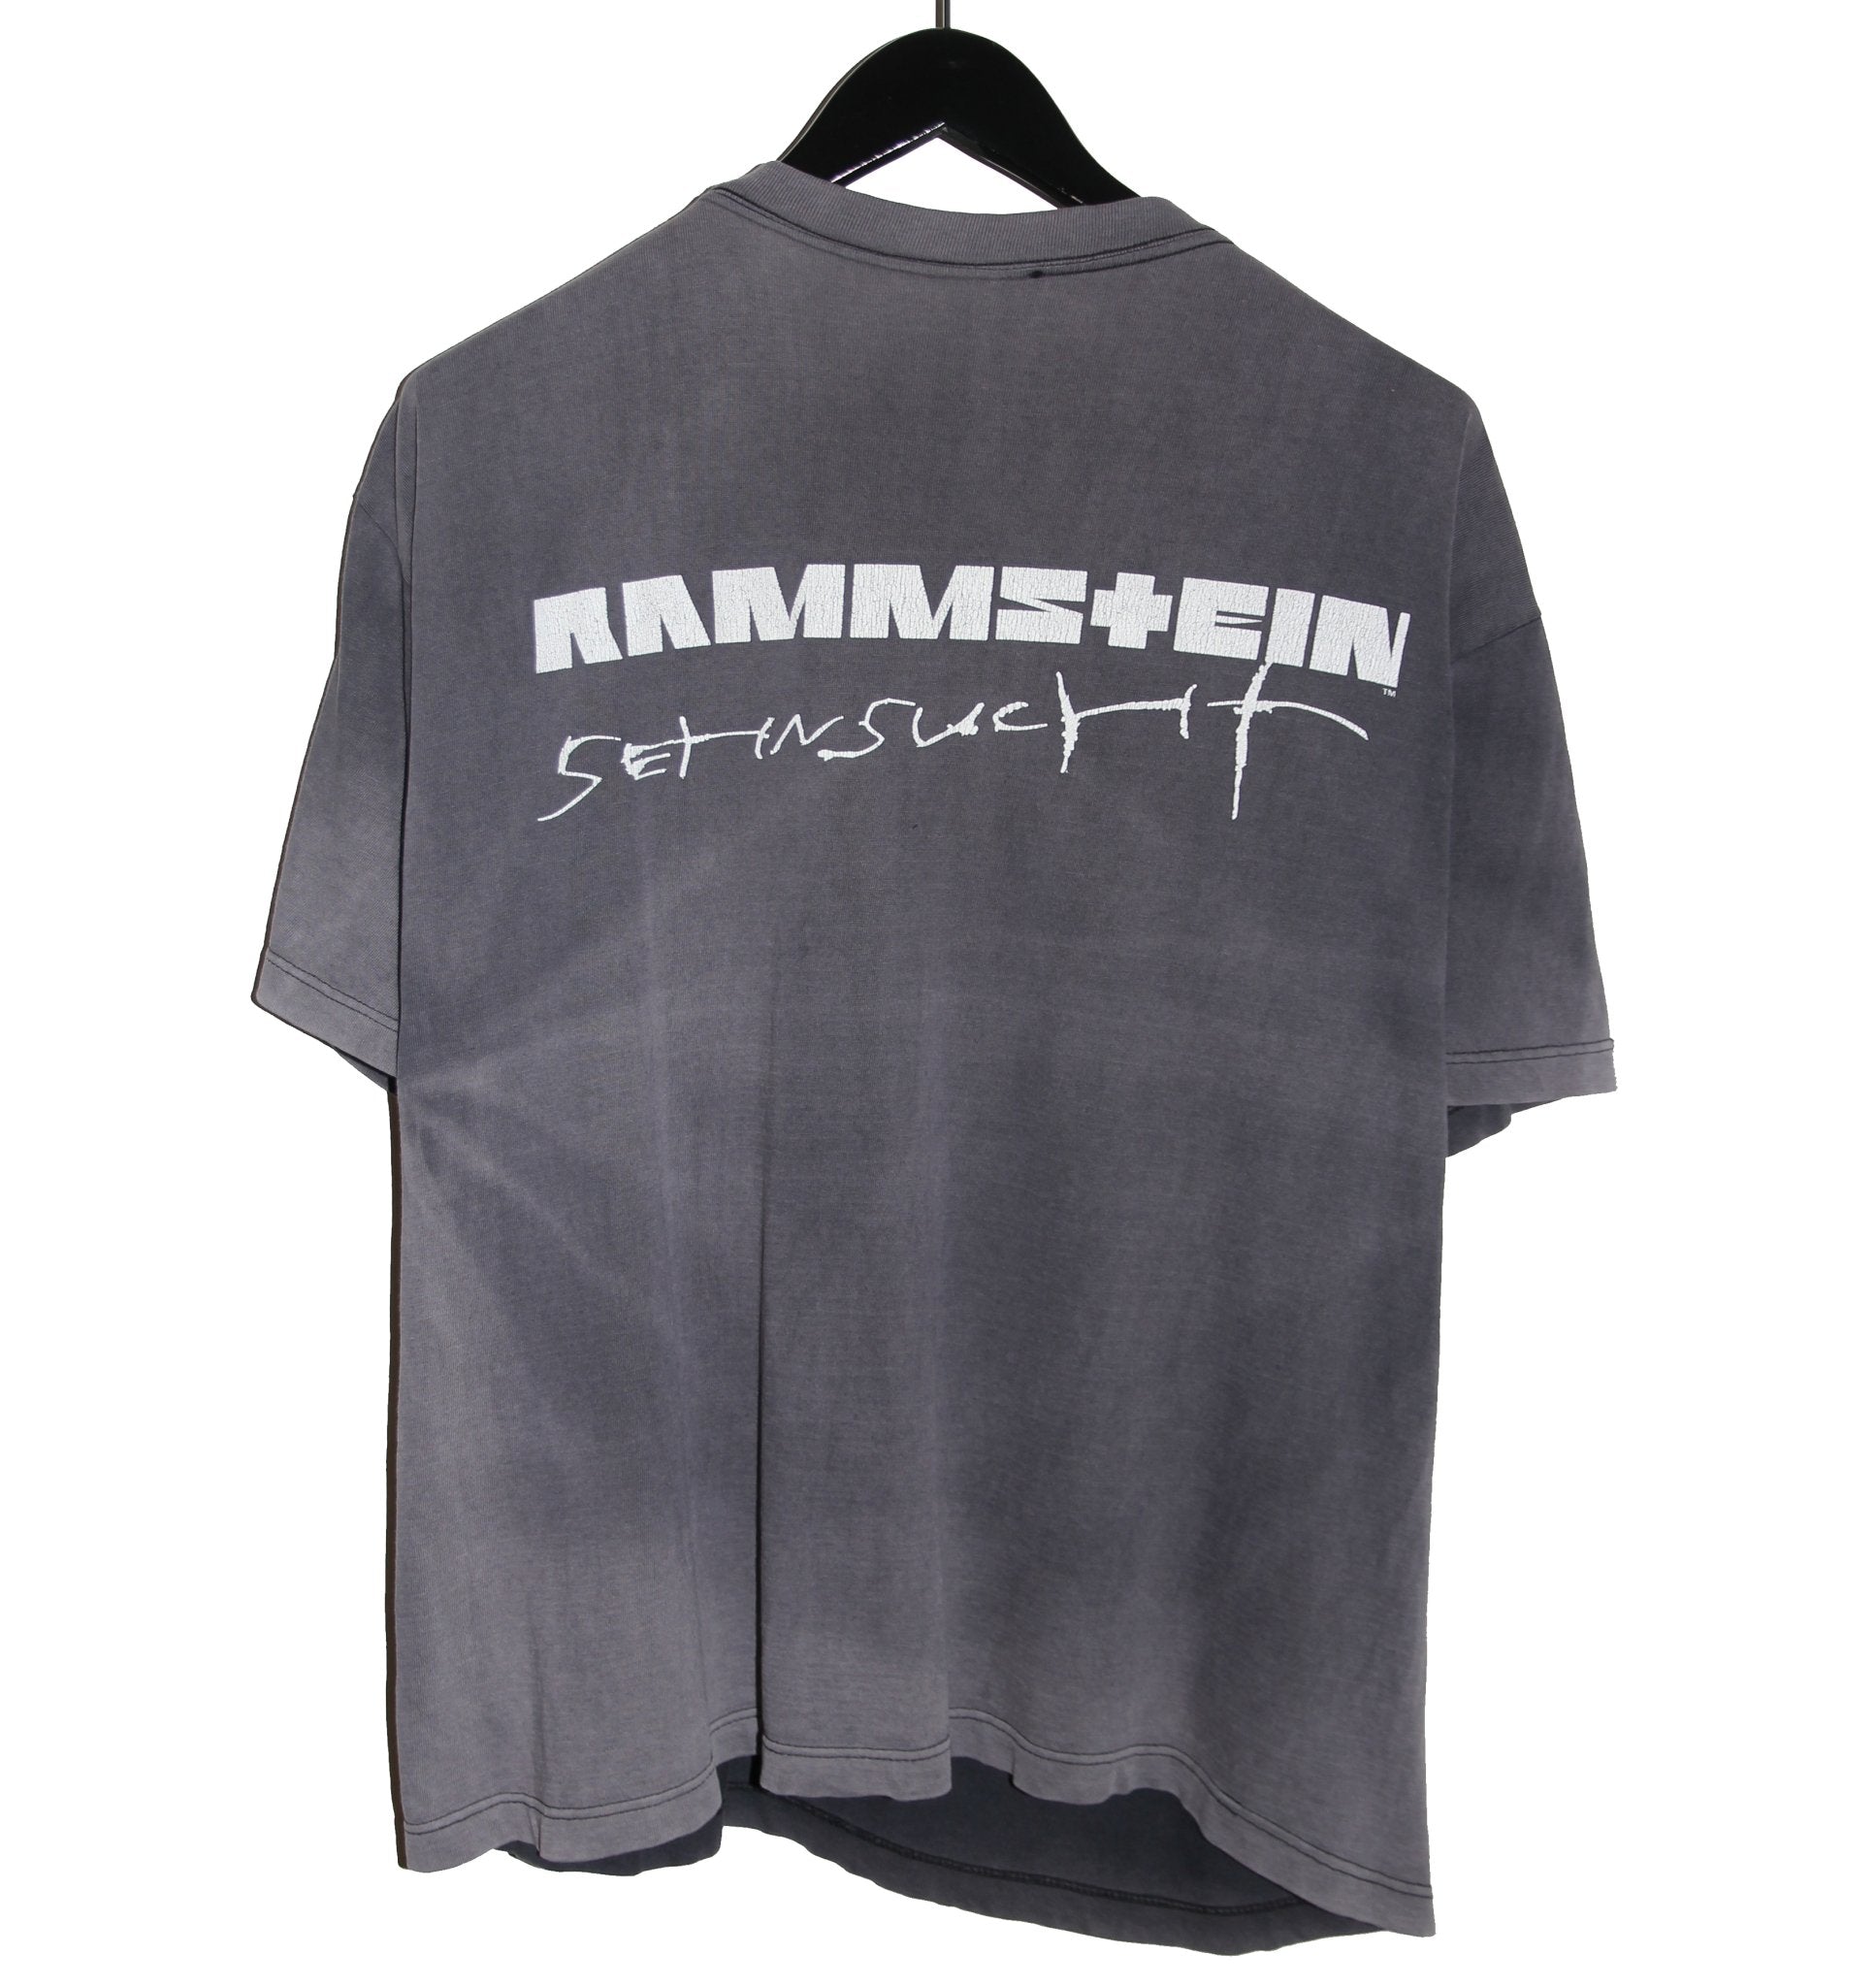 Rammstein 1996 Sehnsucht Album Shirt - Faded AU